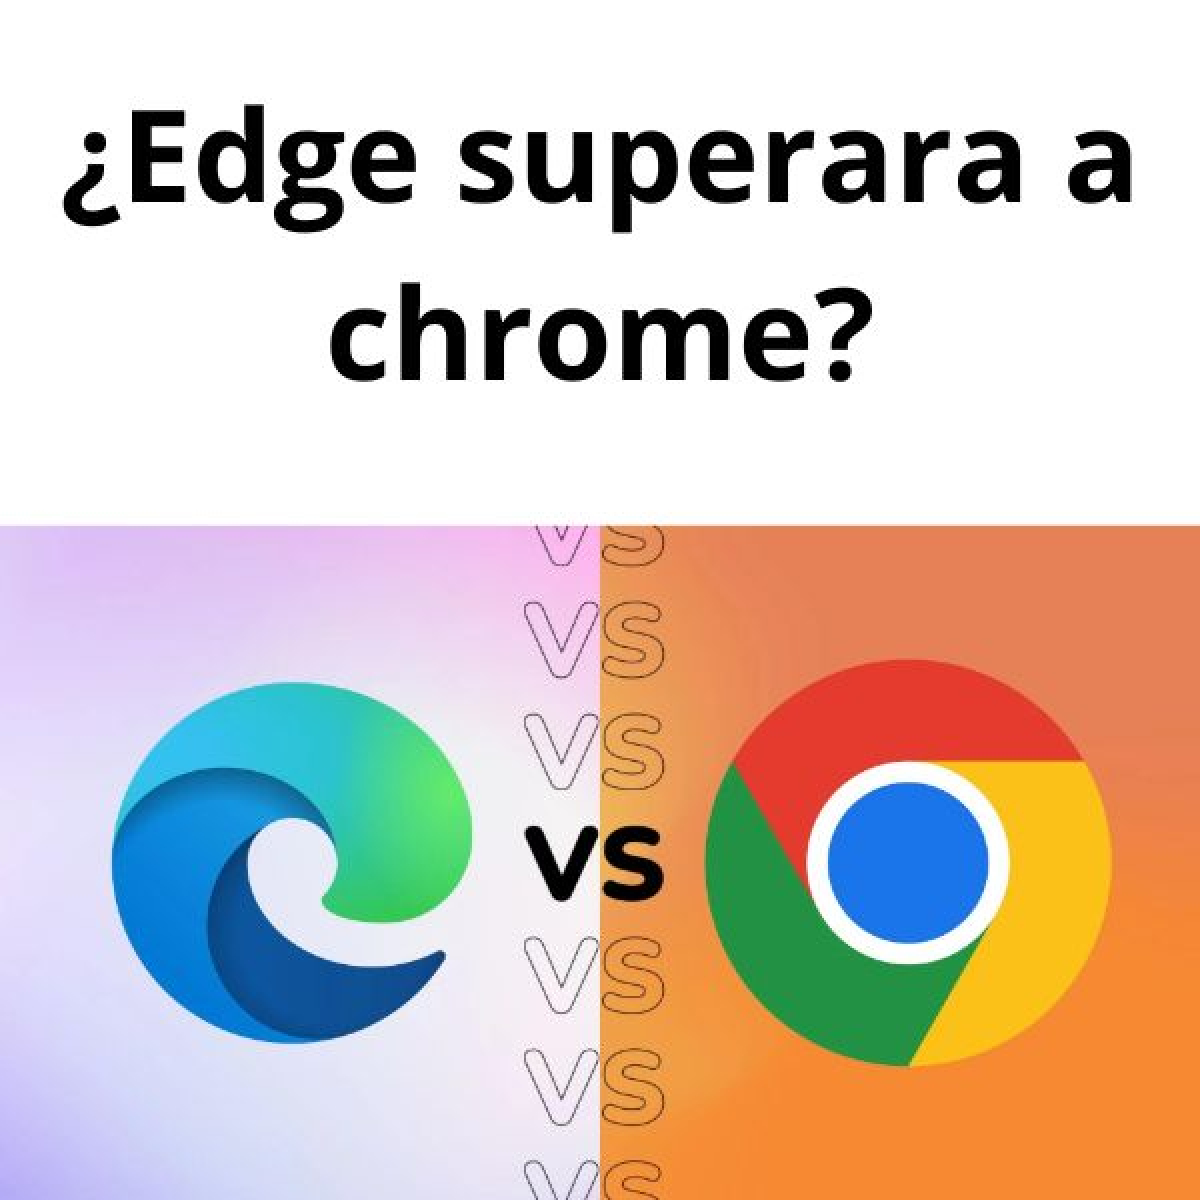 Microsoft Edge vs Google